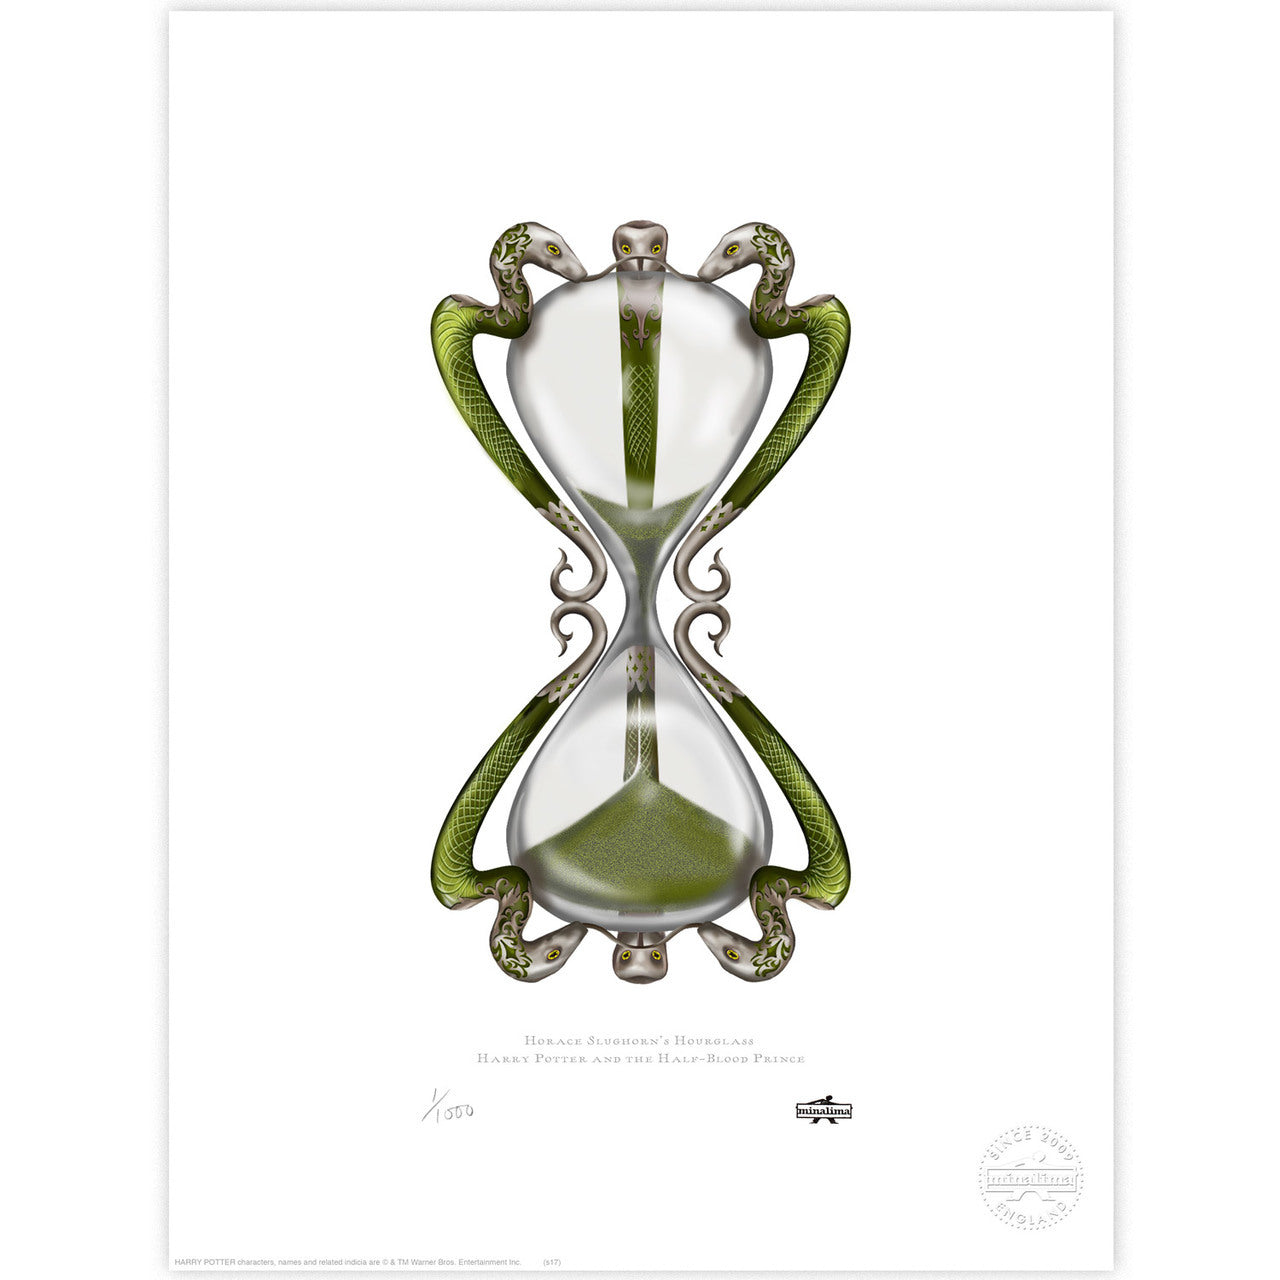 Horace Slughorn's Hourglass Limited Edition Art Print